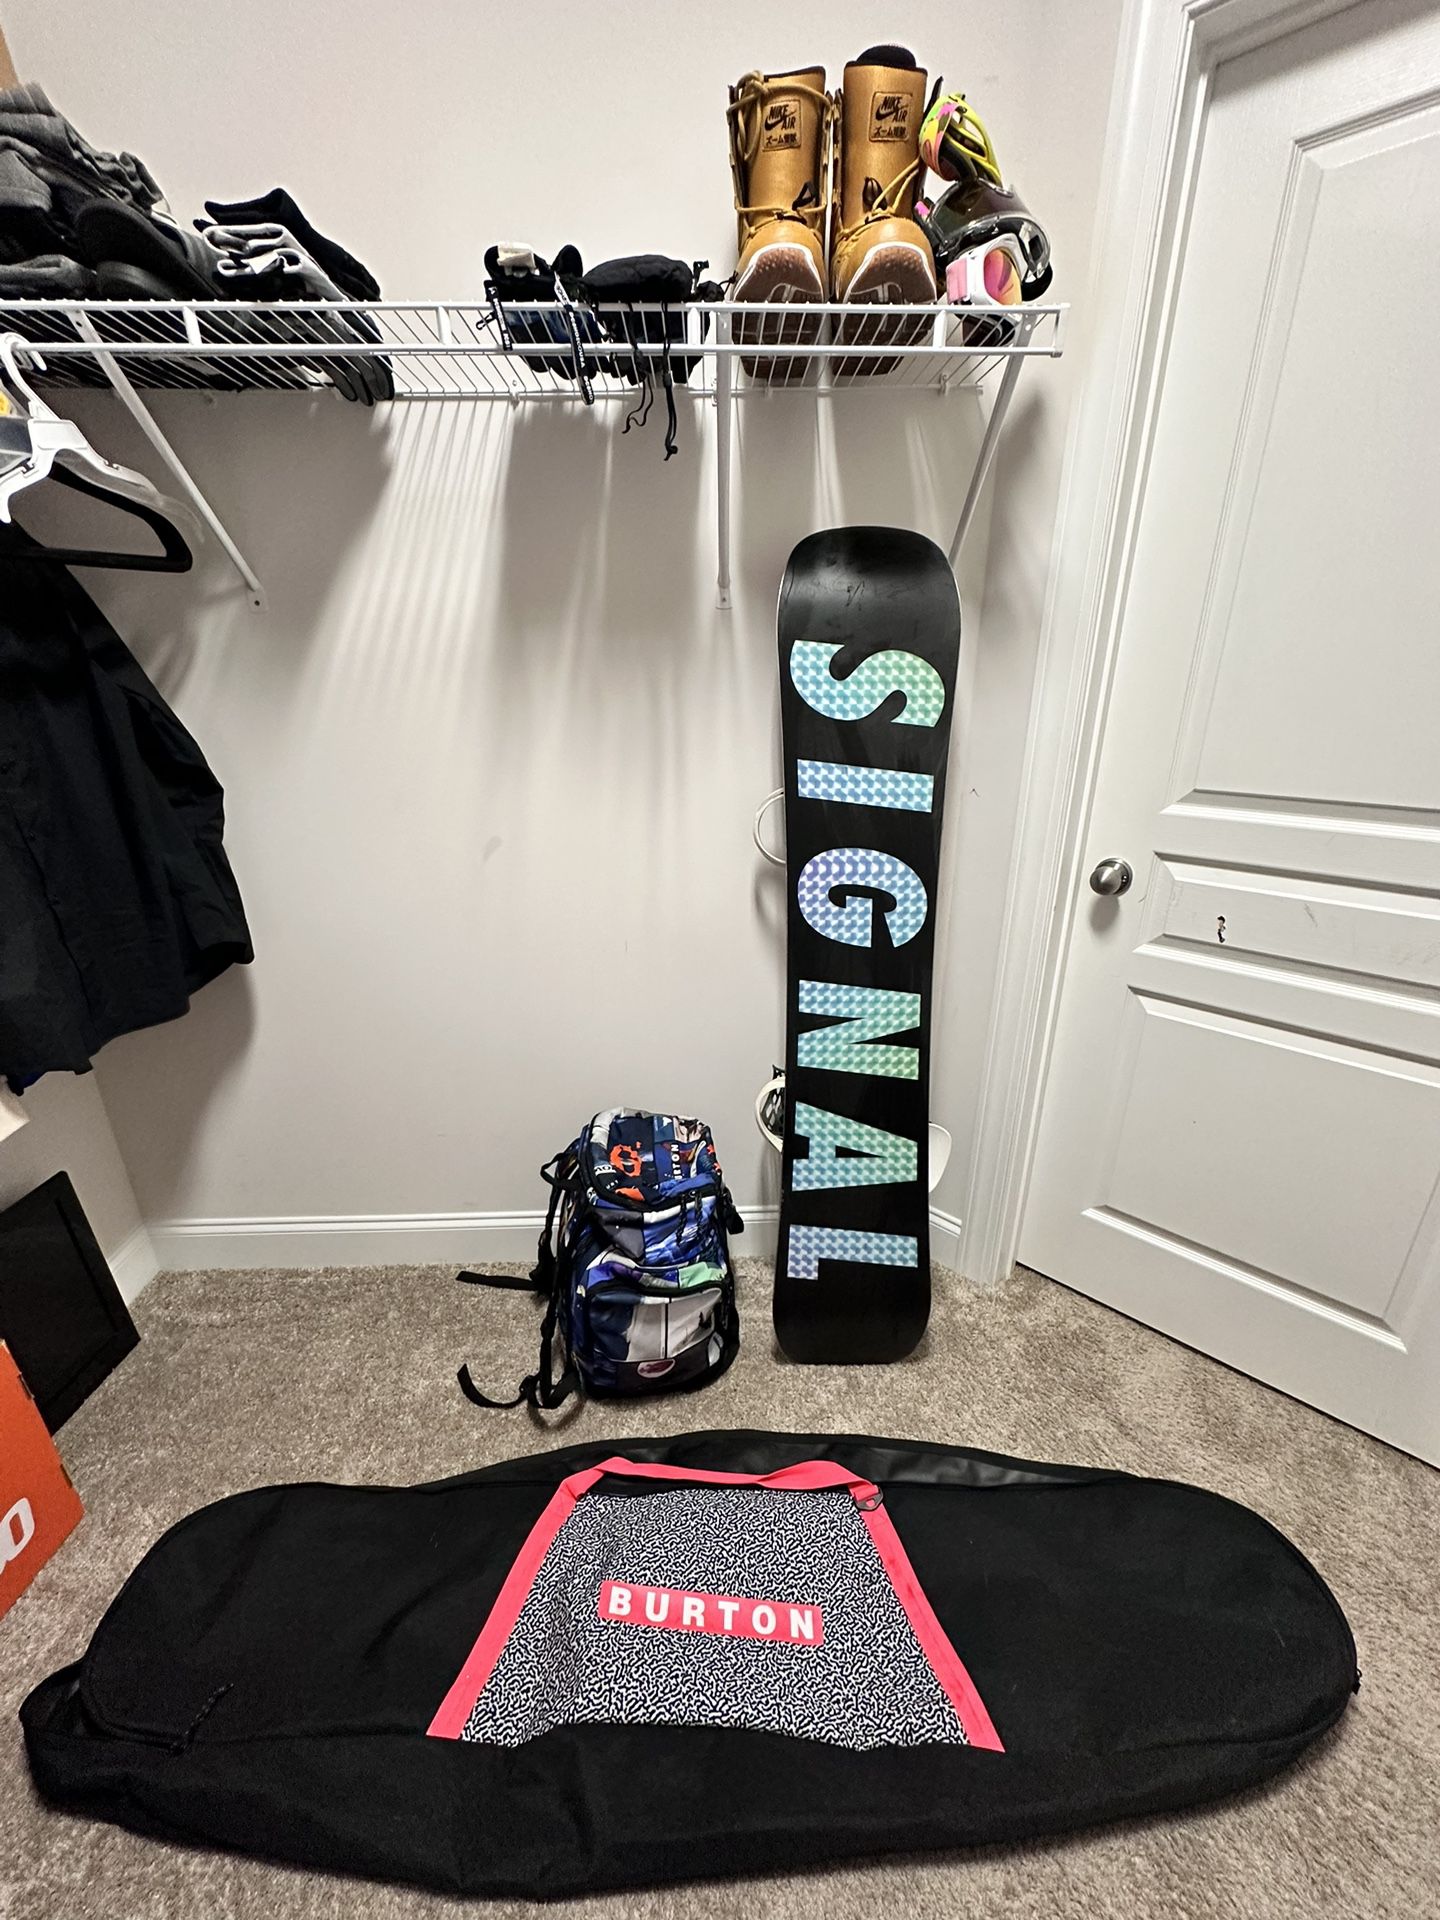 (200$) Signal Park Platinum Snowboard 156” With Burton Bags & Gloves